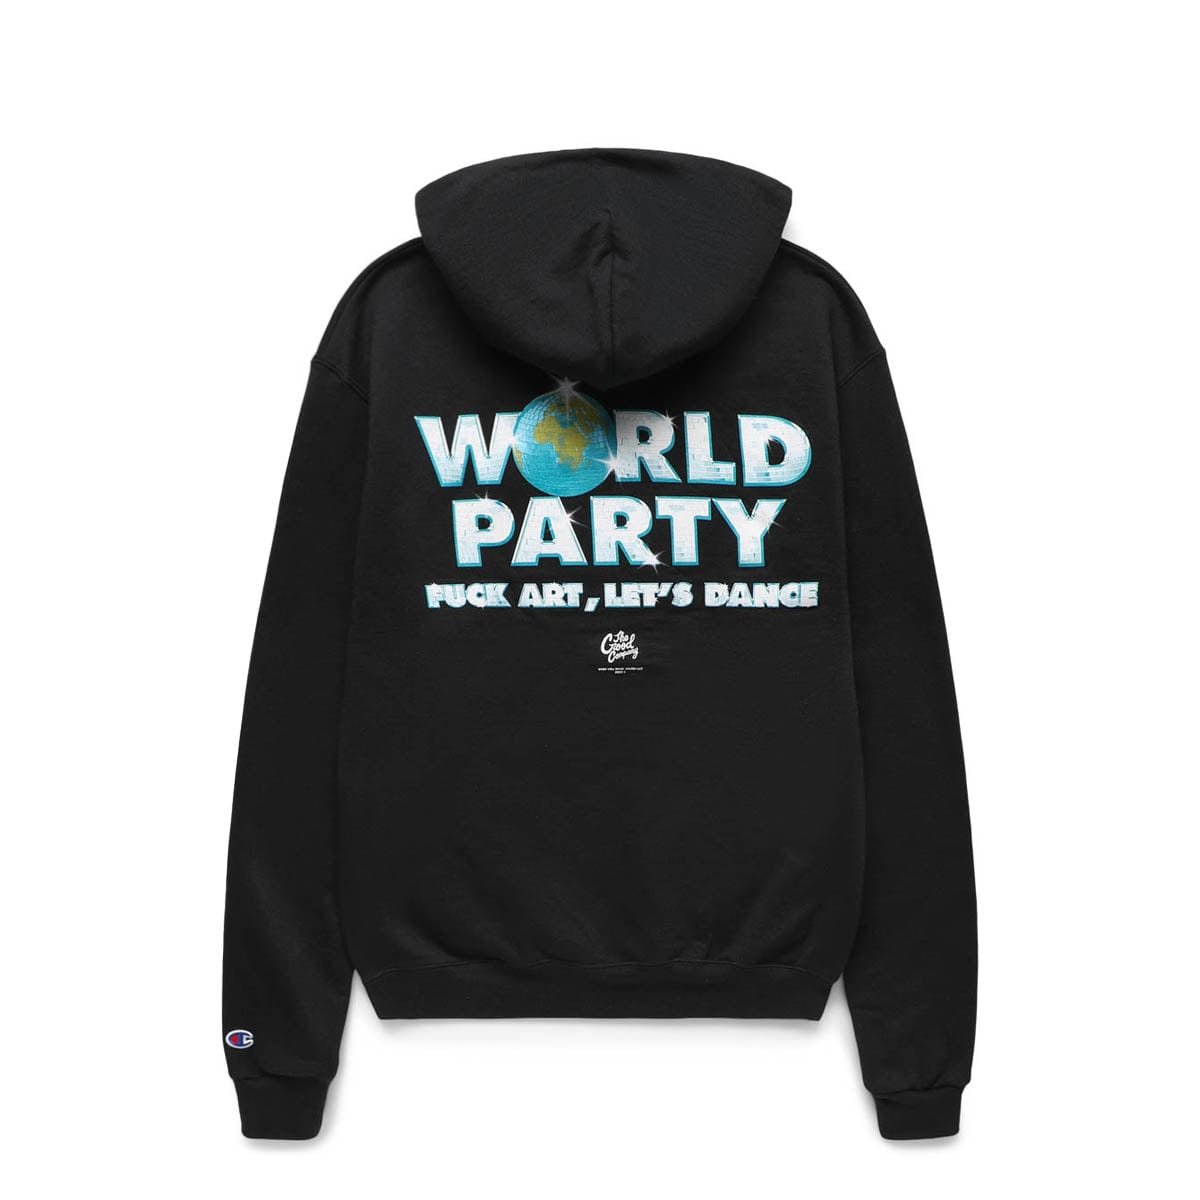 The Good Company Hoodies & Sweatshirts WORLD PARTY HOODIE